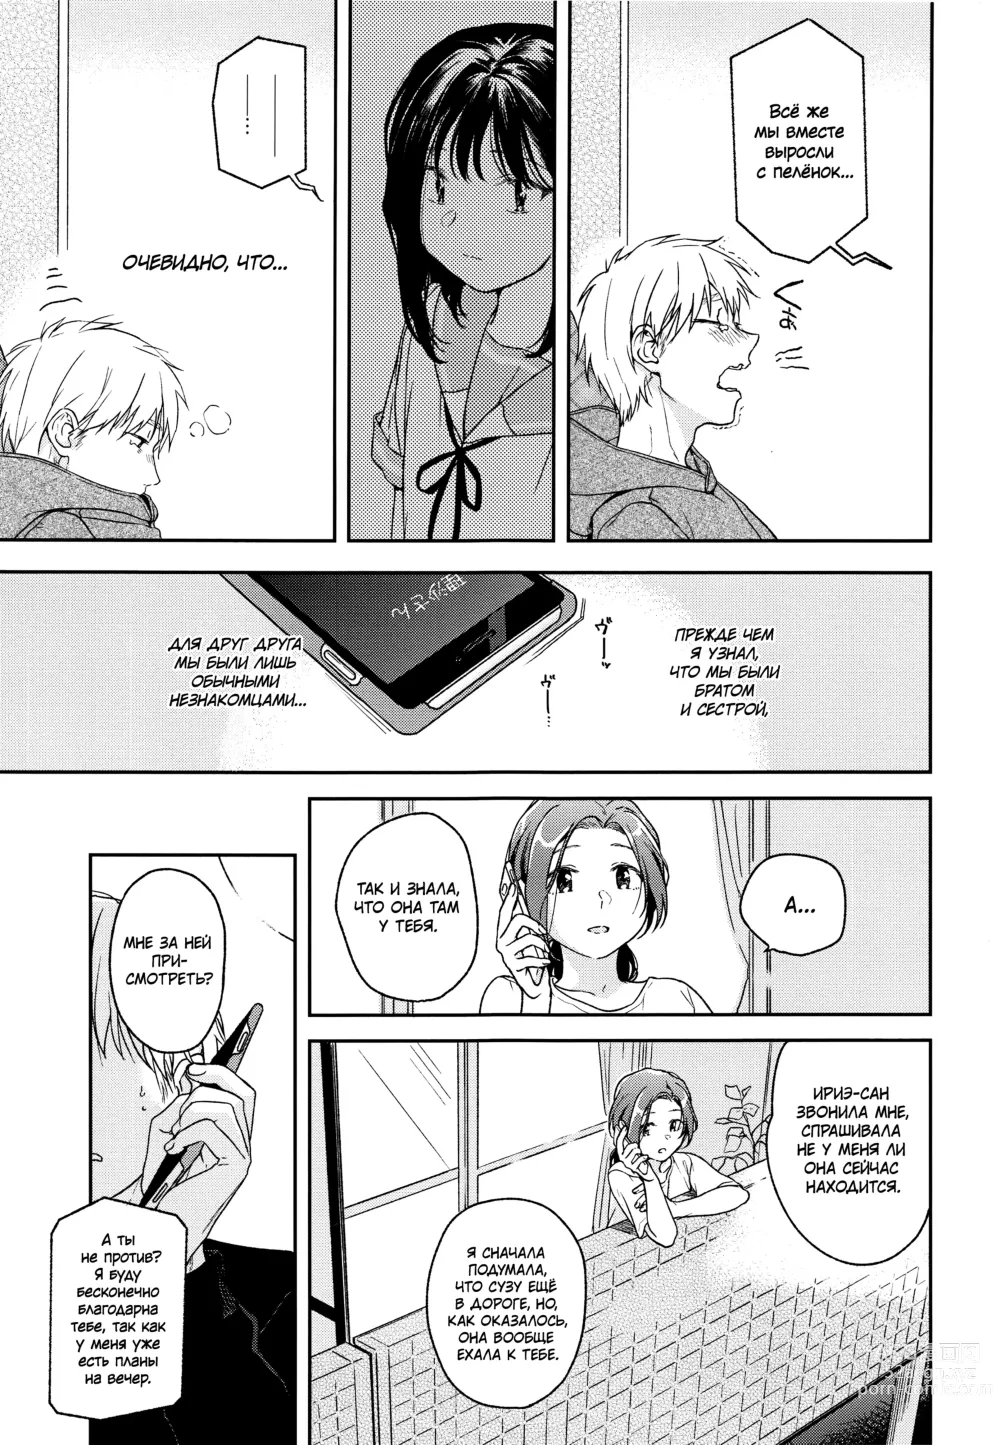 Page 6 of doujinshi Yukari 2